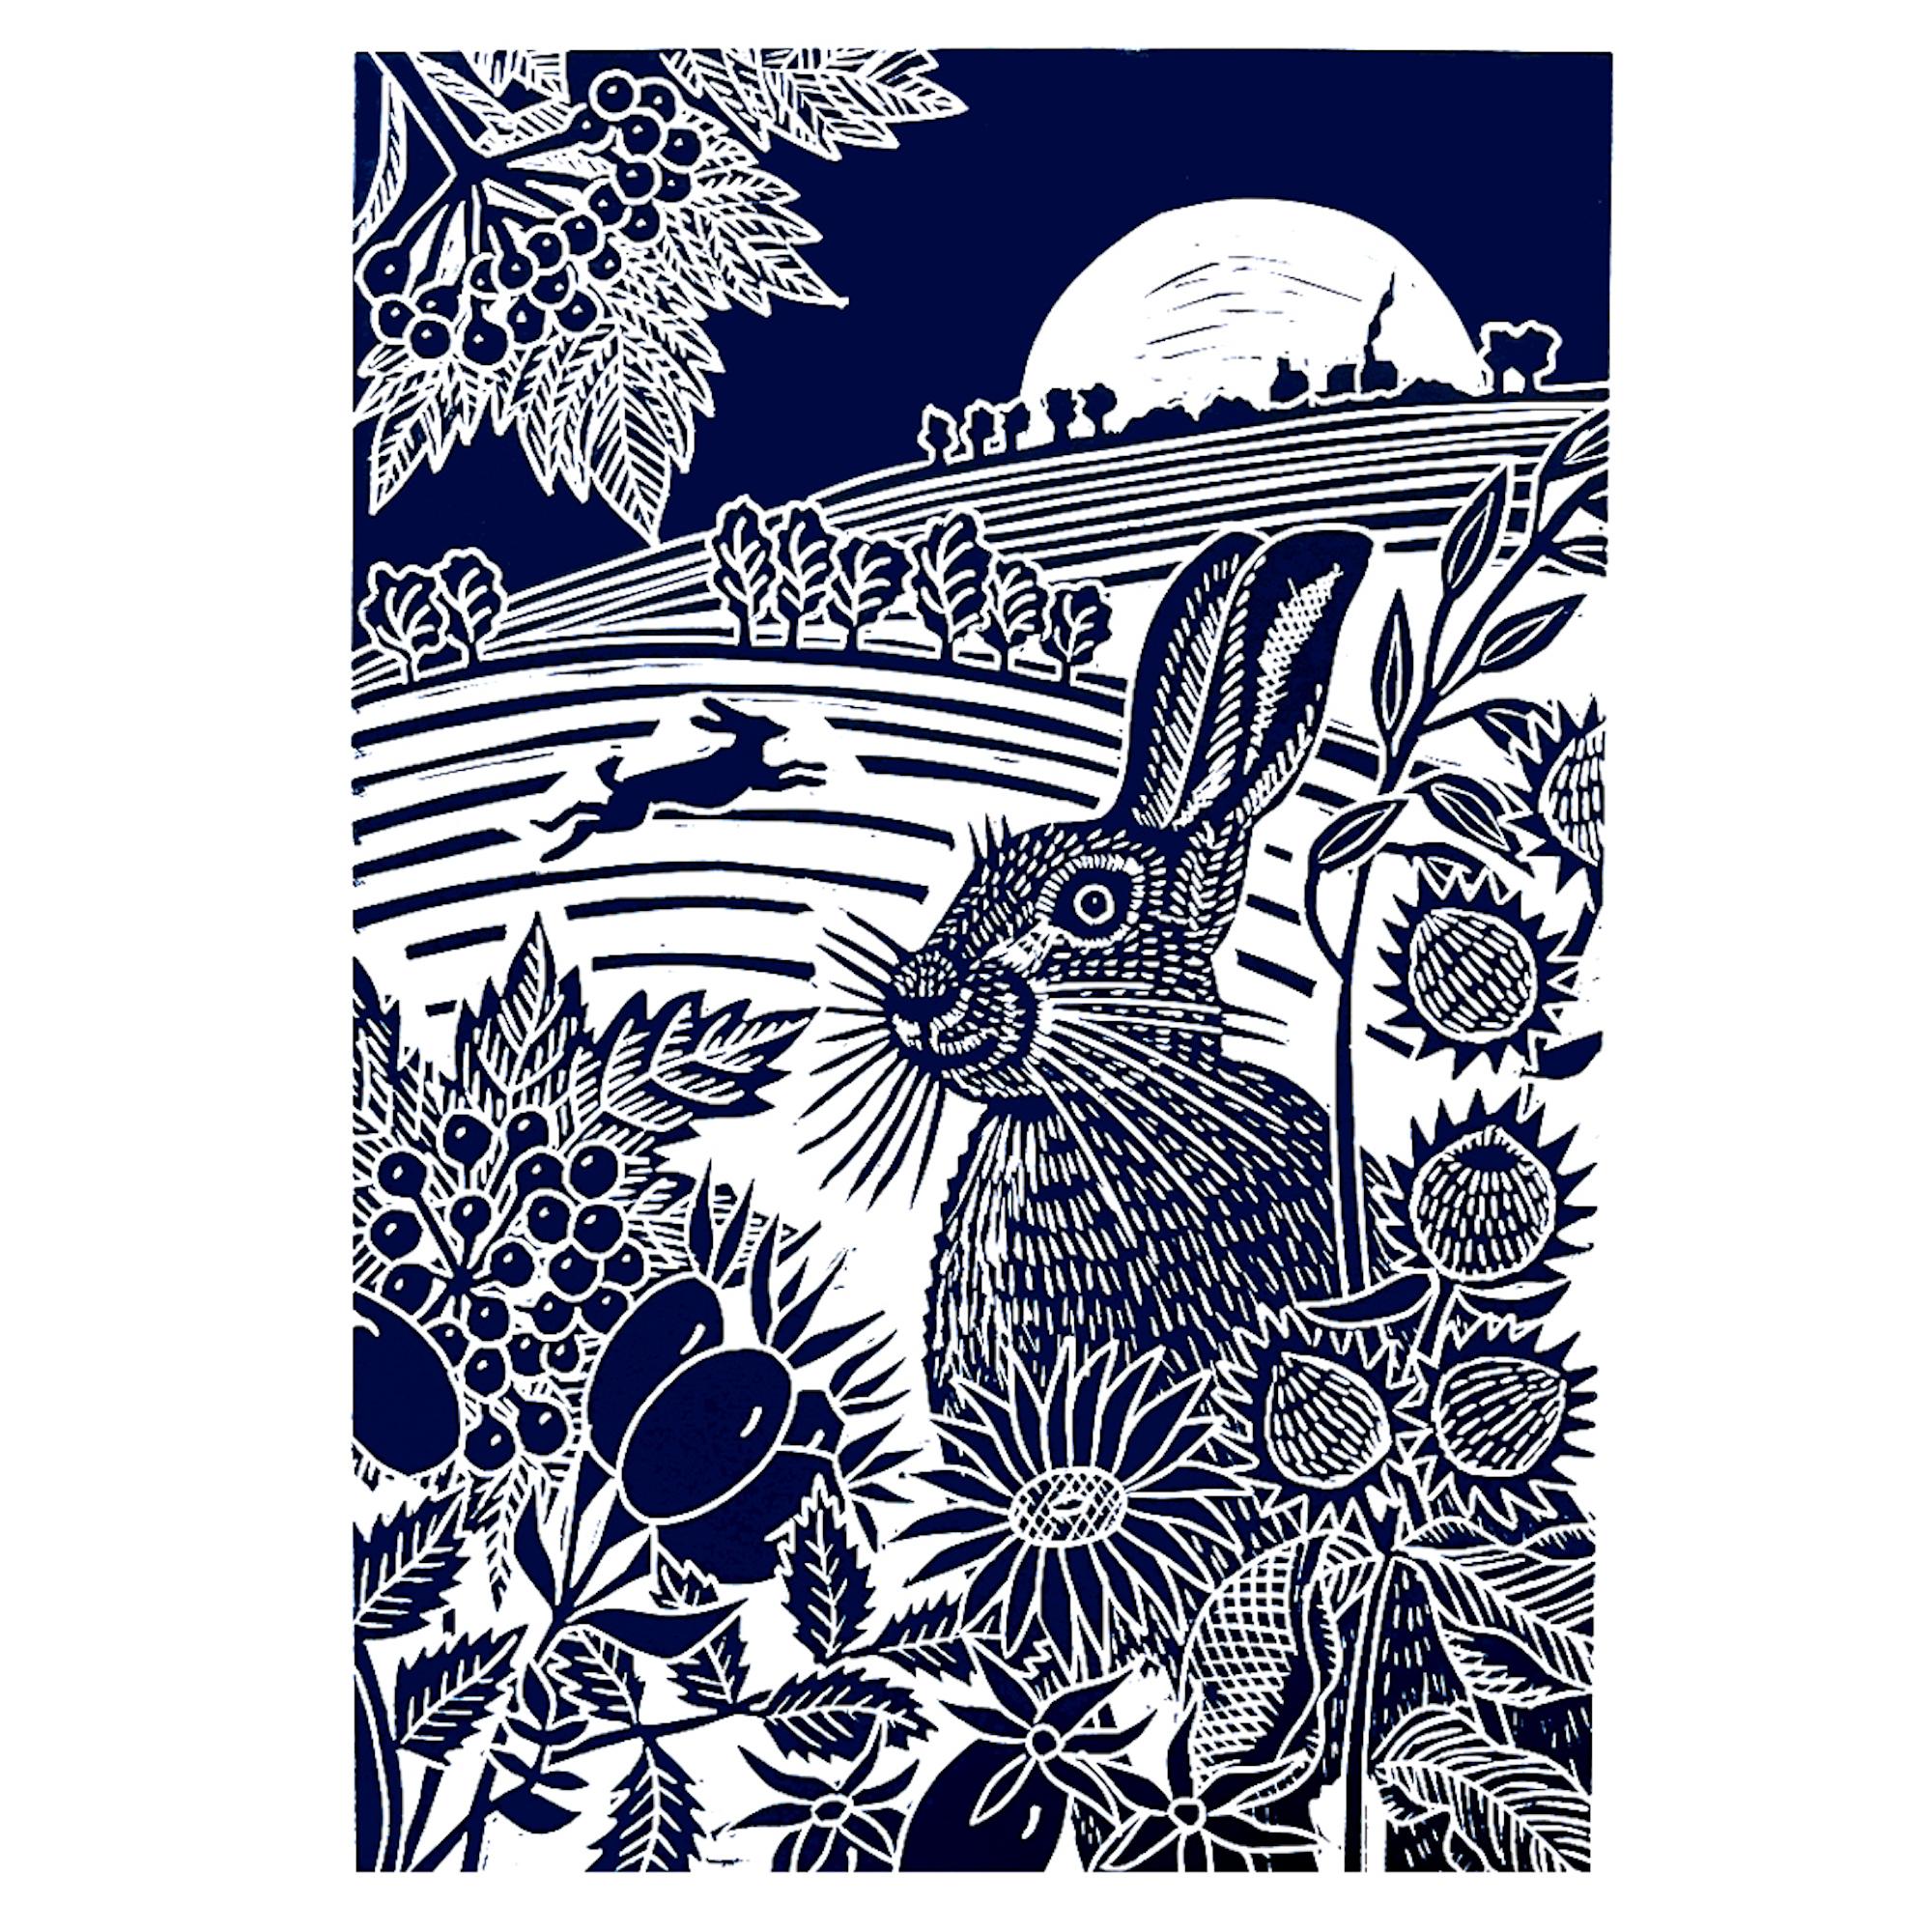 Harvest Moon Hares, Art animalier, œuvre d'art minimaliste, gravure à la linogravure